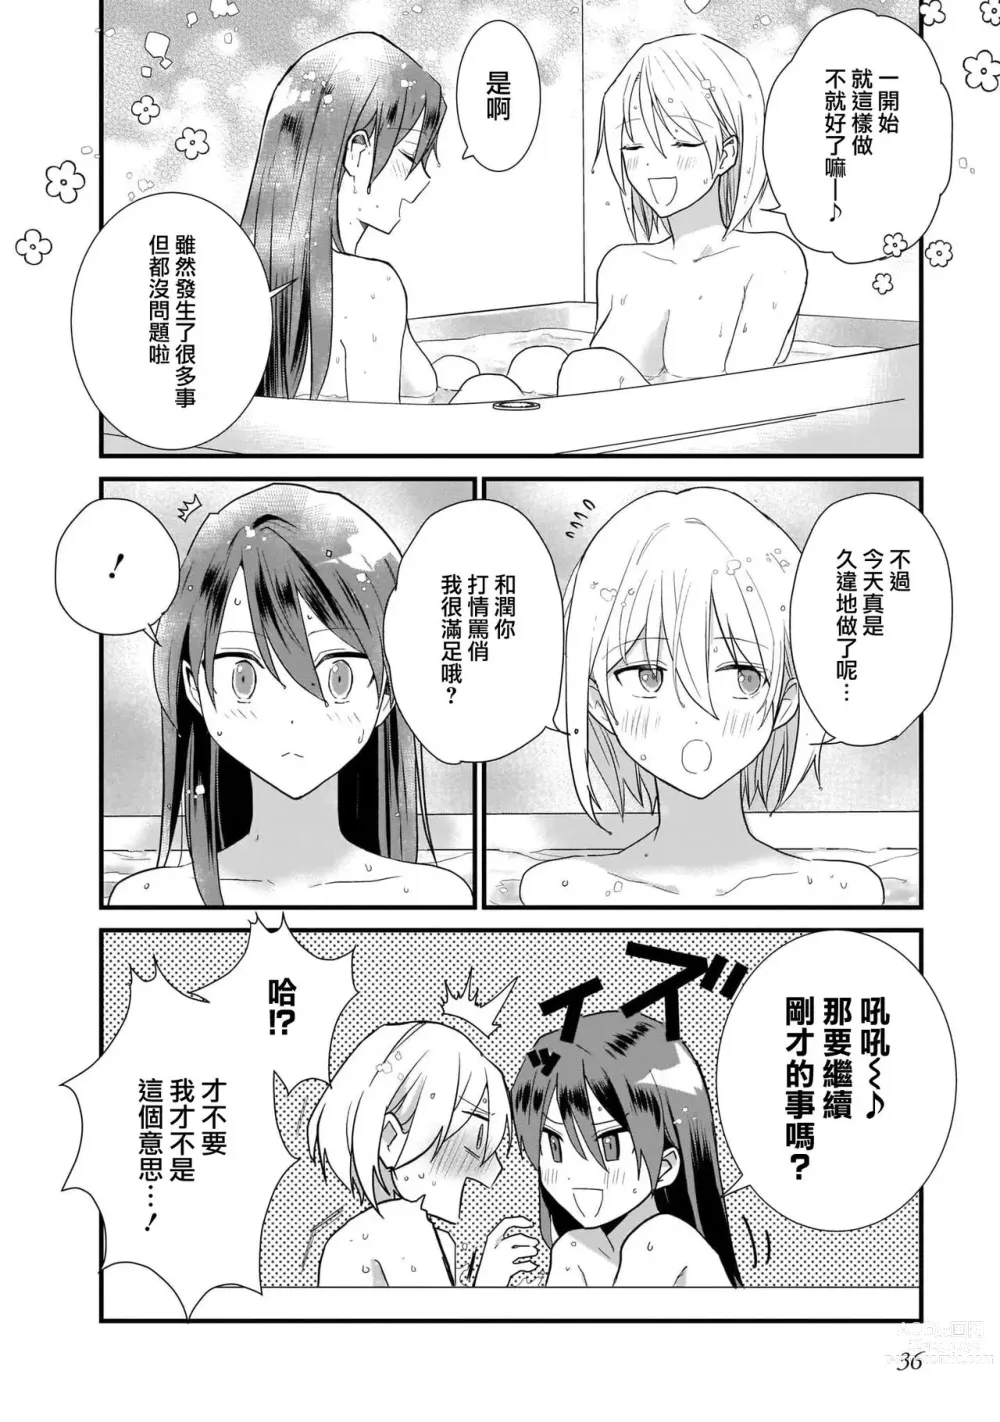 Page 17 of manga 冷却运动